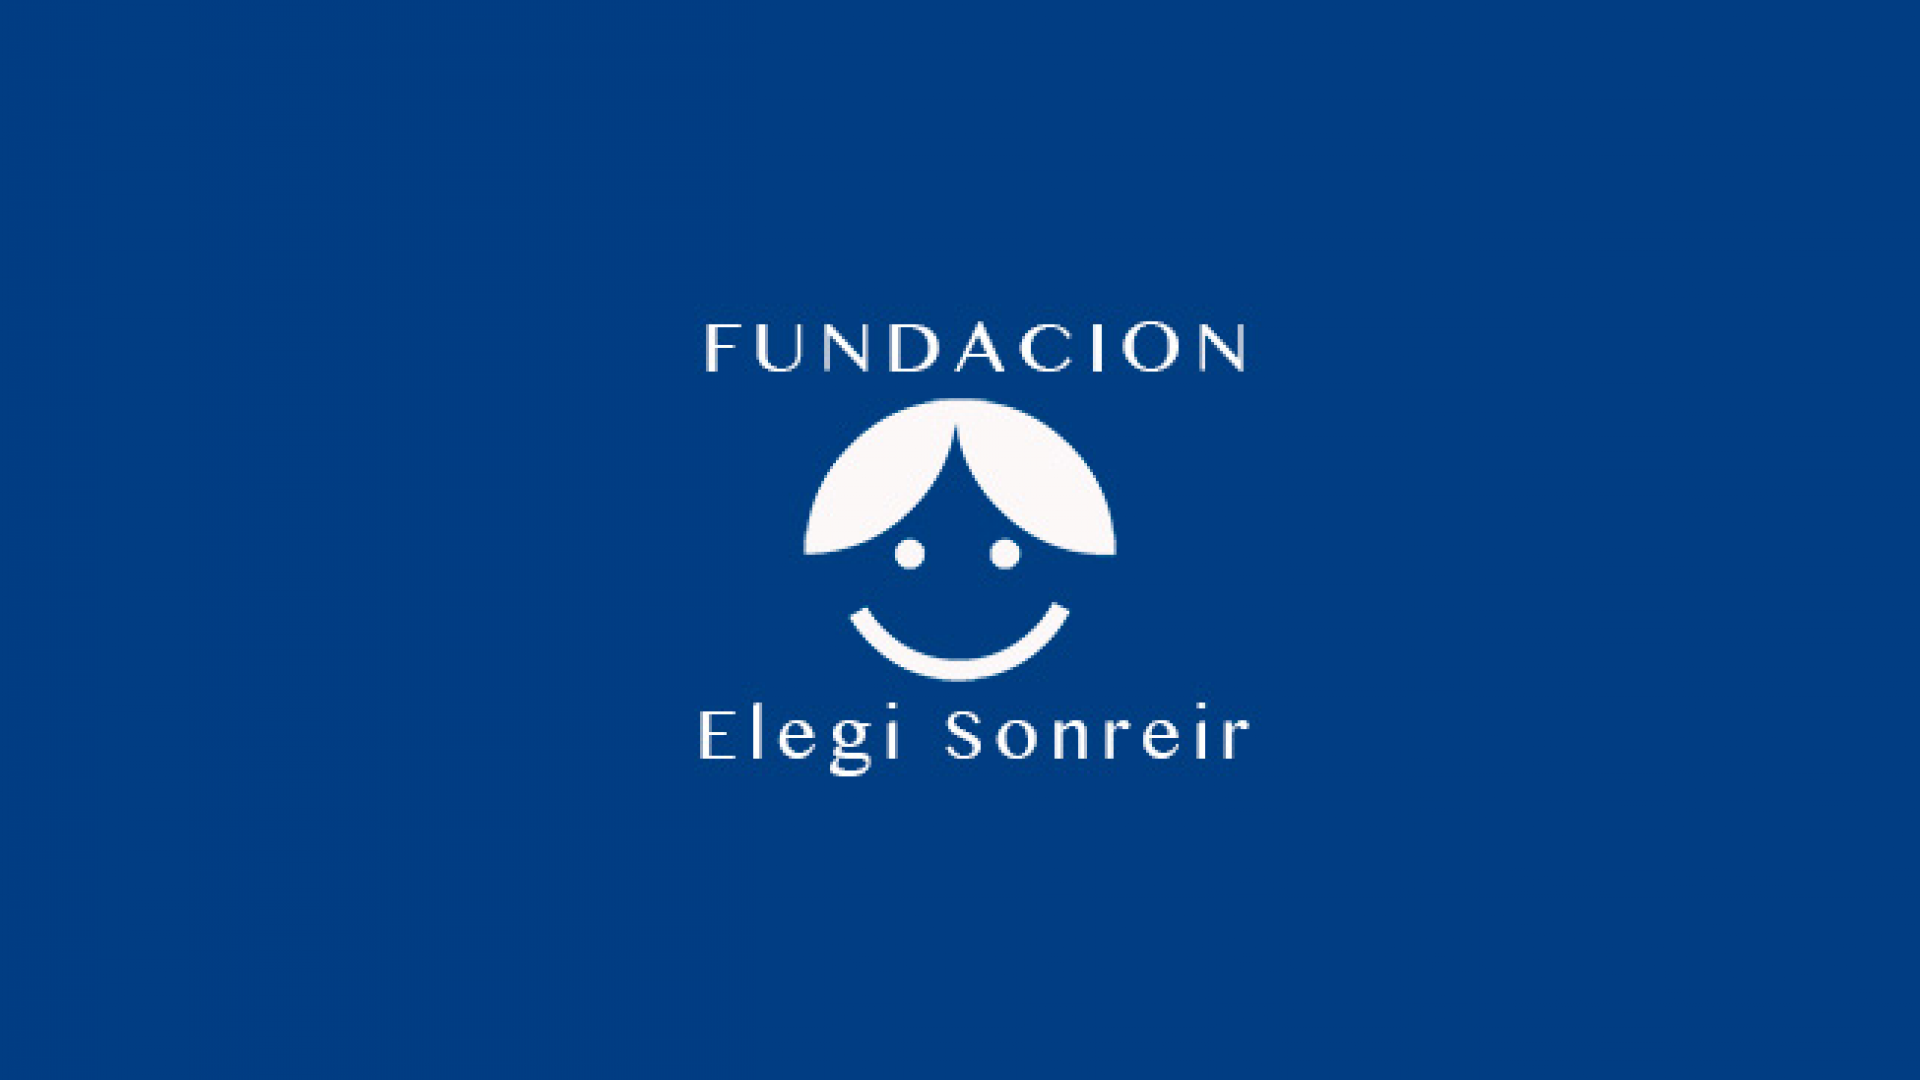 Fundación Elegí Sonreír